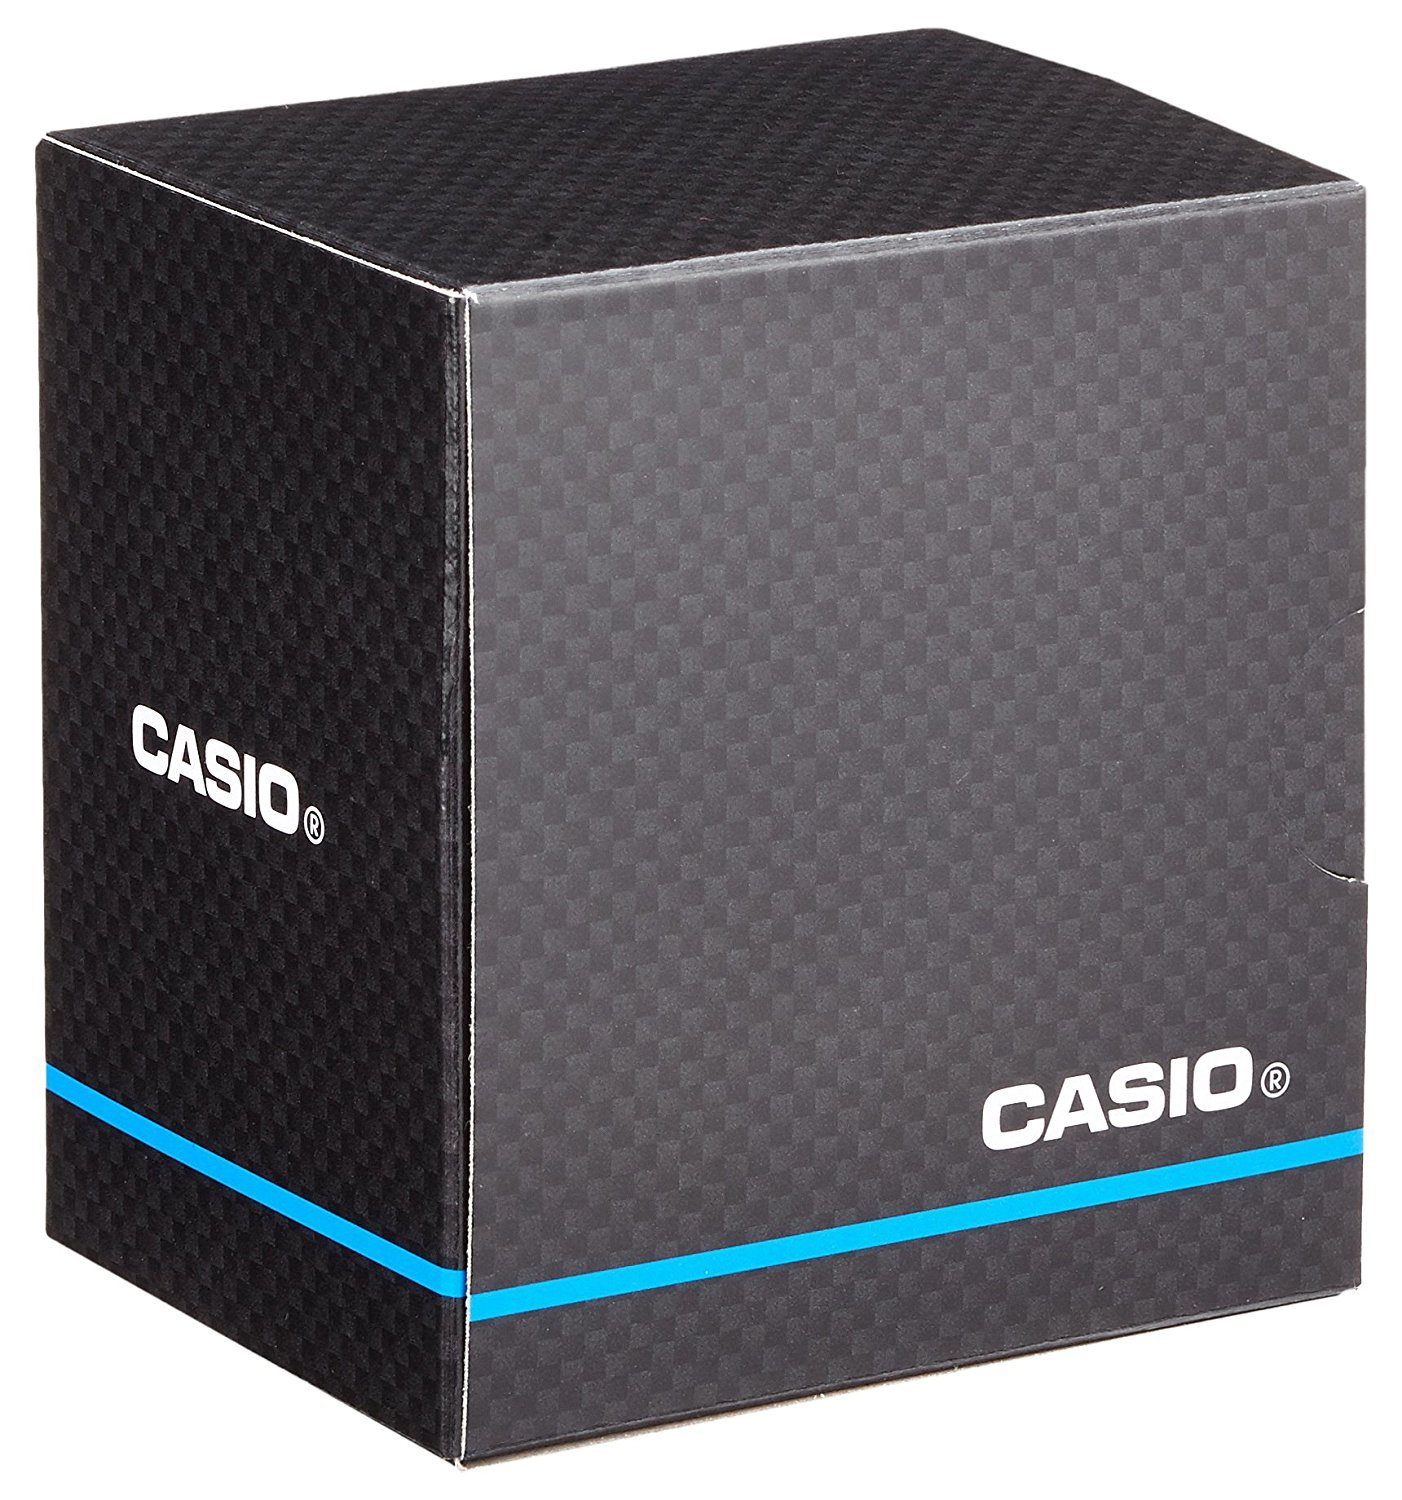 Casio Digital (Model: AE-1500WH-8BVEF), Black